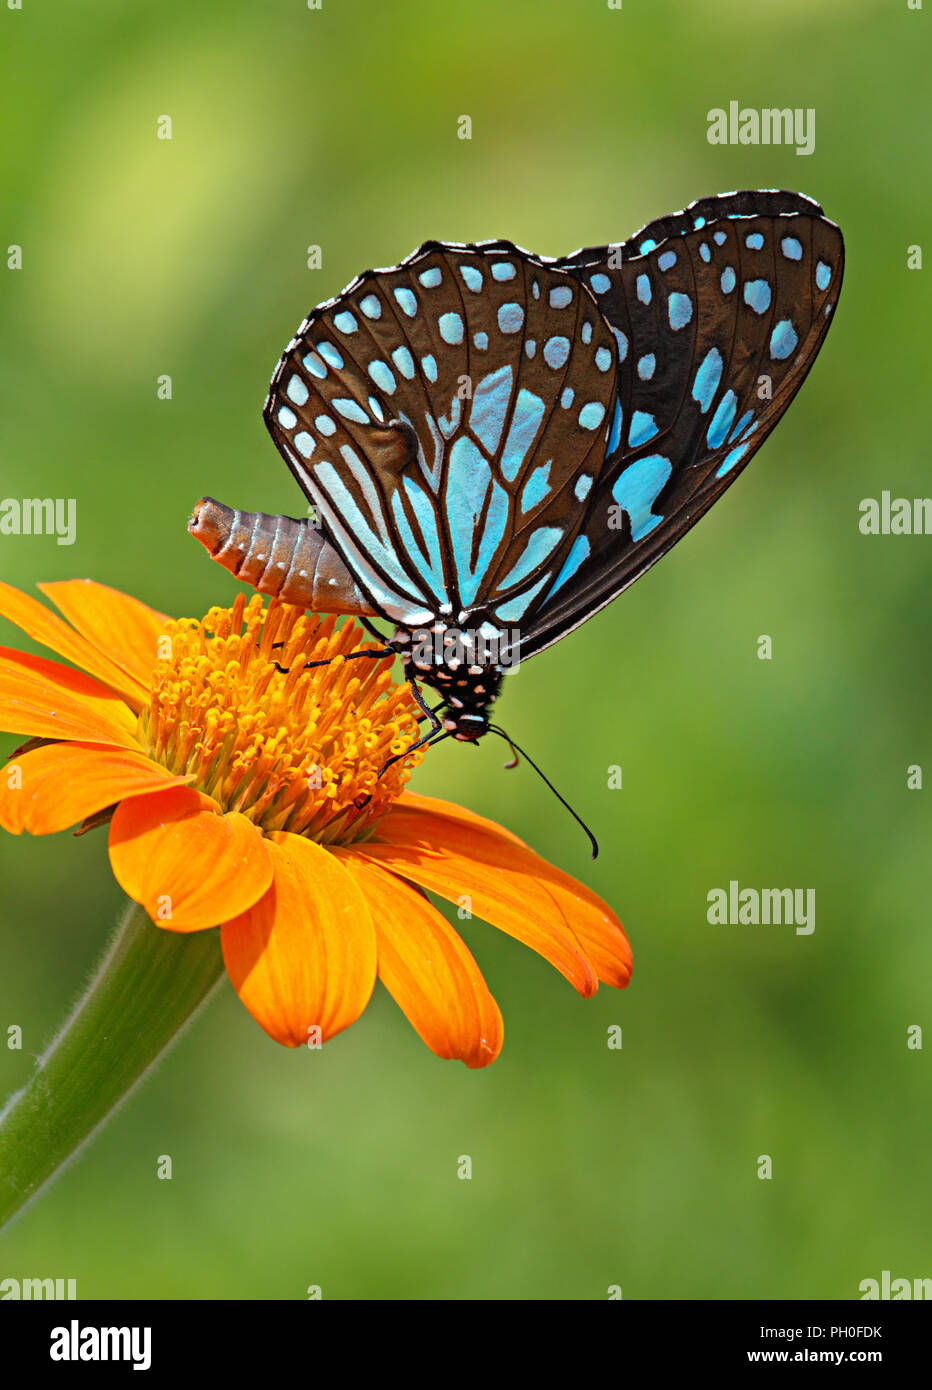 Tigre azul o Danaid Tirumala limniace mariposa sobre una flor de naranja con fondo verde. Foto de stock